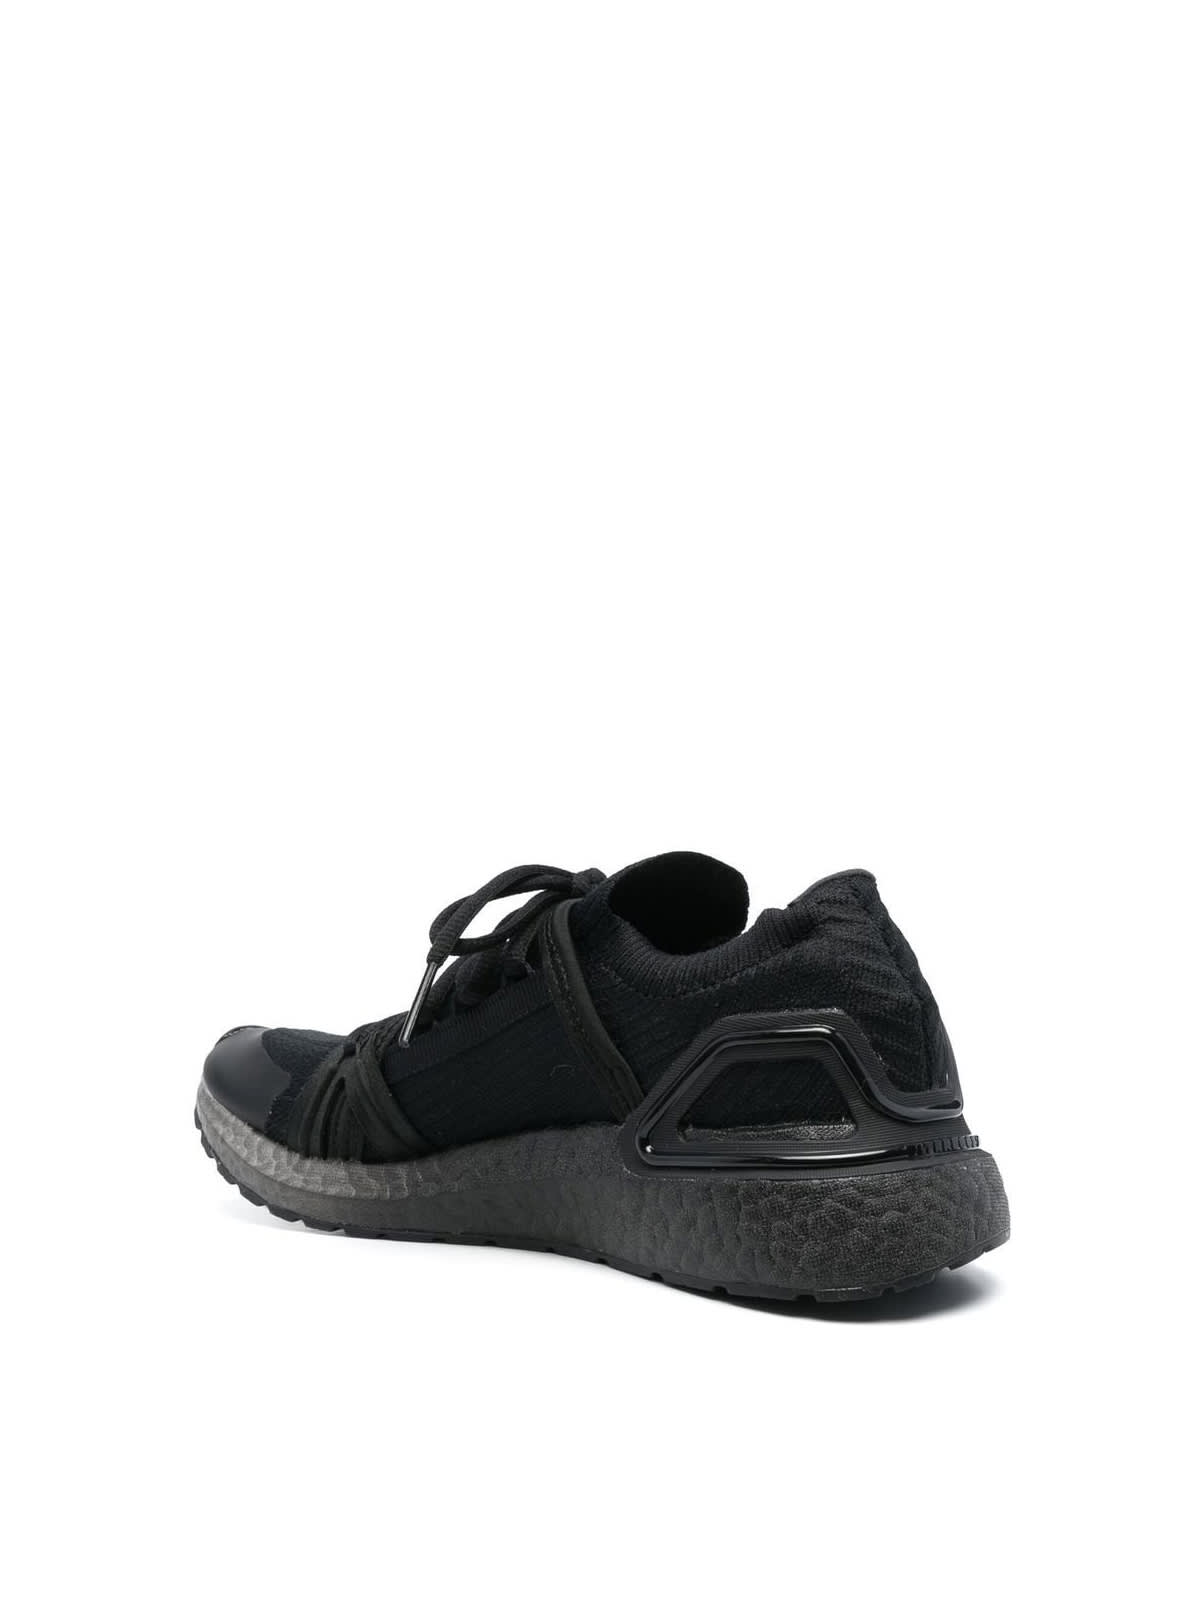 Shop Adidas By Stella Mccartney Asmc Ultraboost 20 Sneakers In Cblack Cblack Cblack